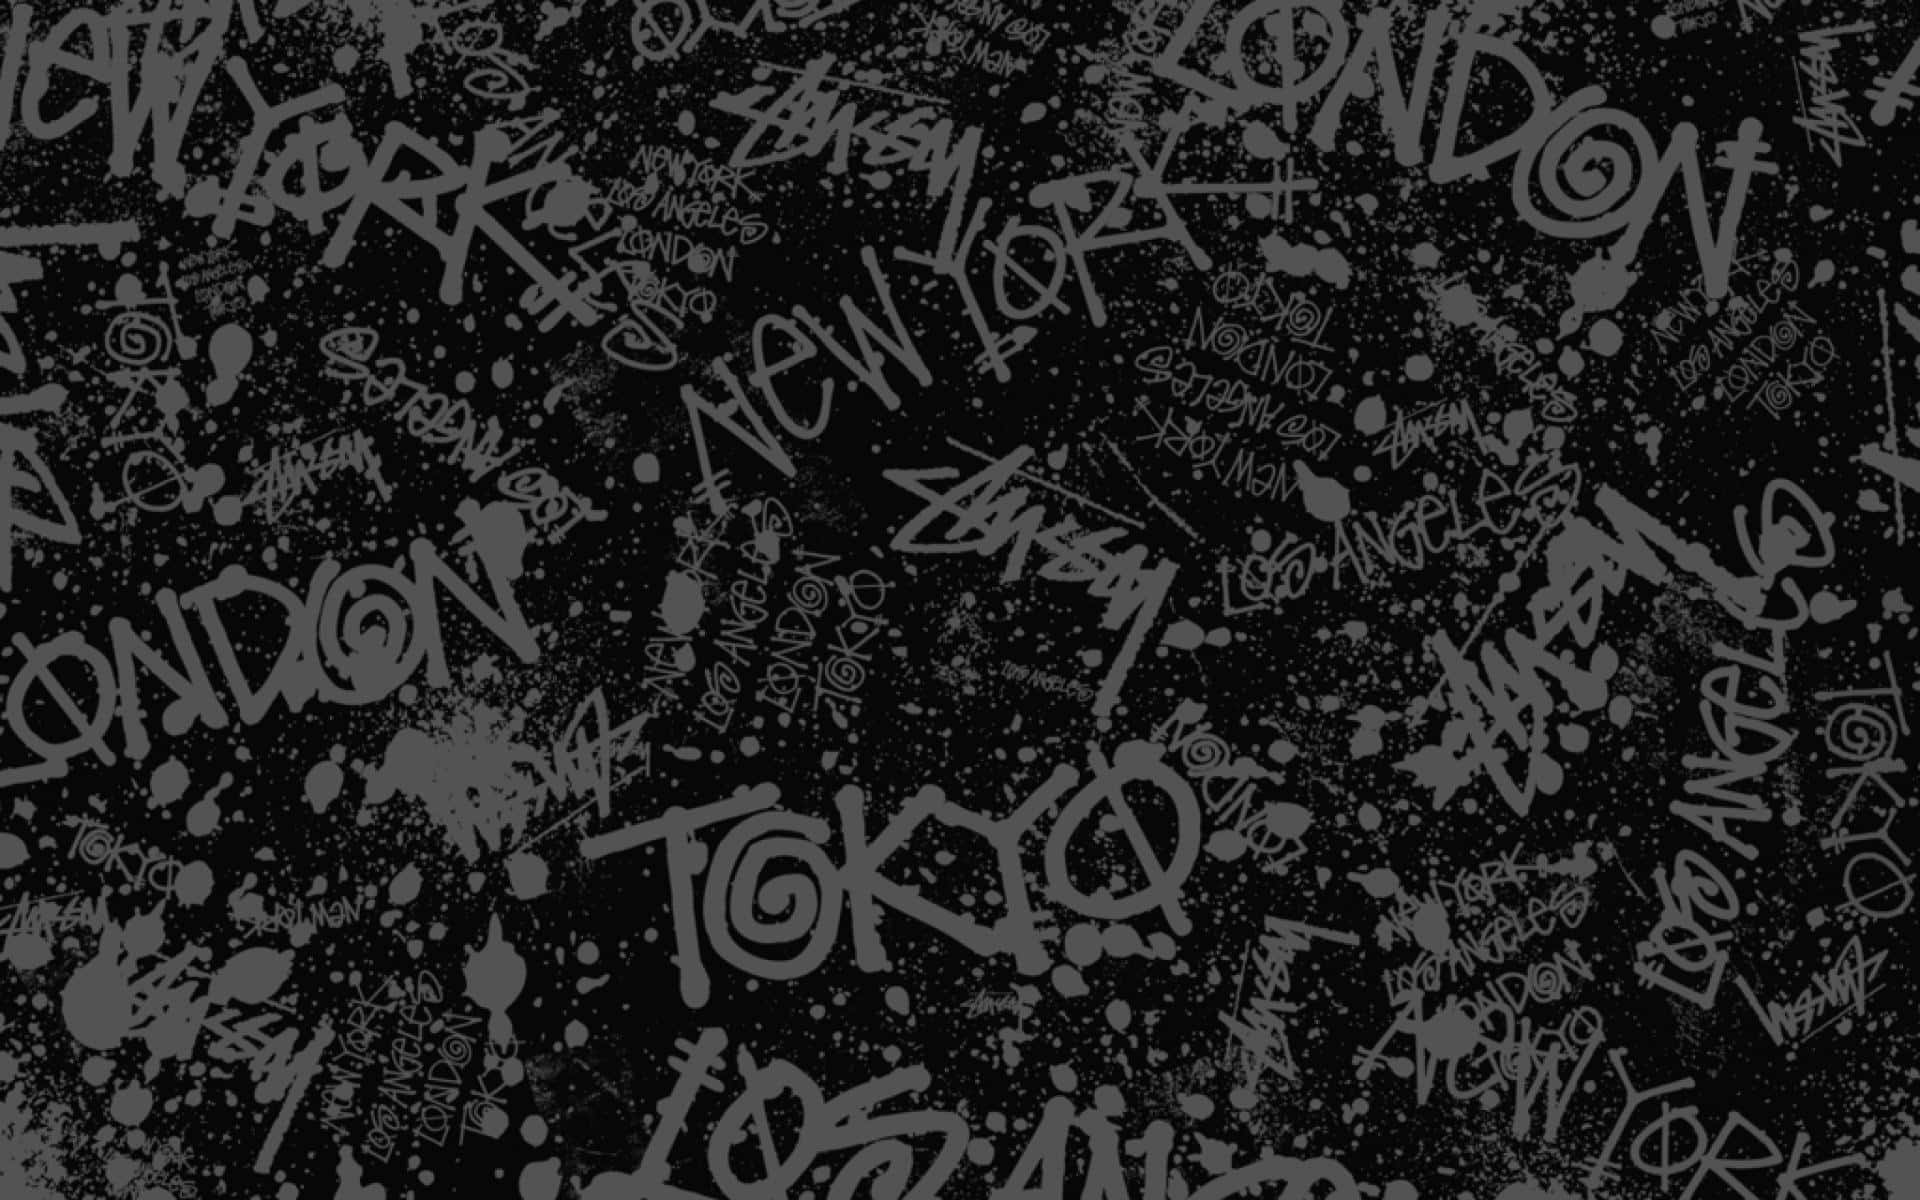 Grunge_ Urban_ Tagging_ Background Wallpaper